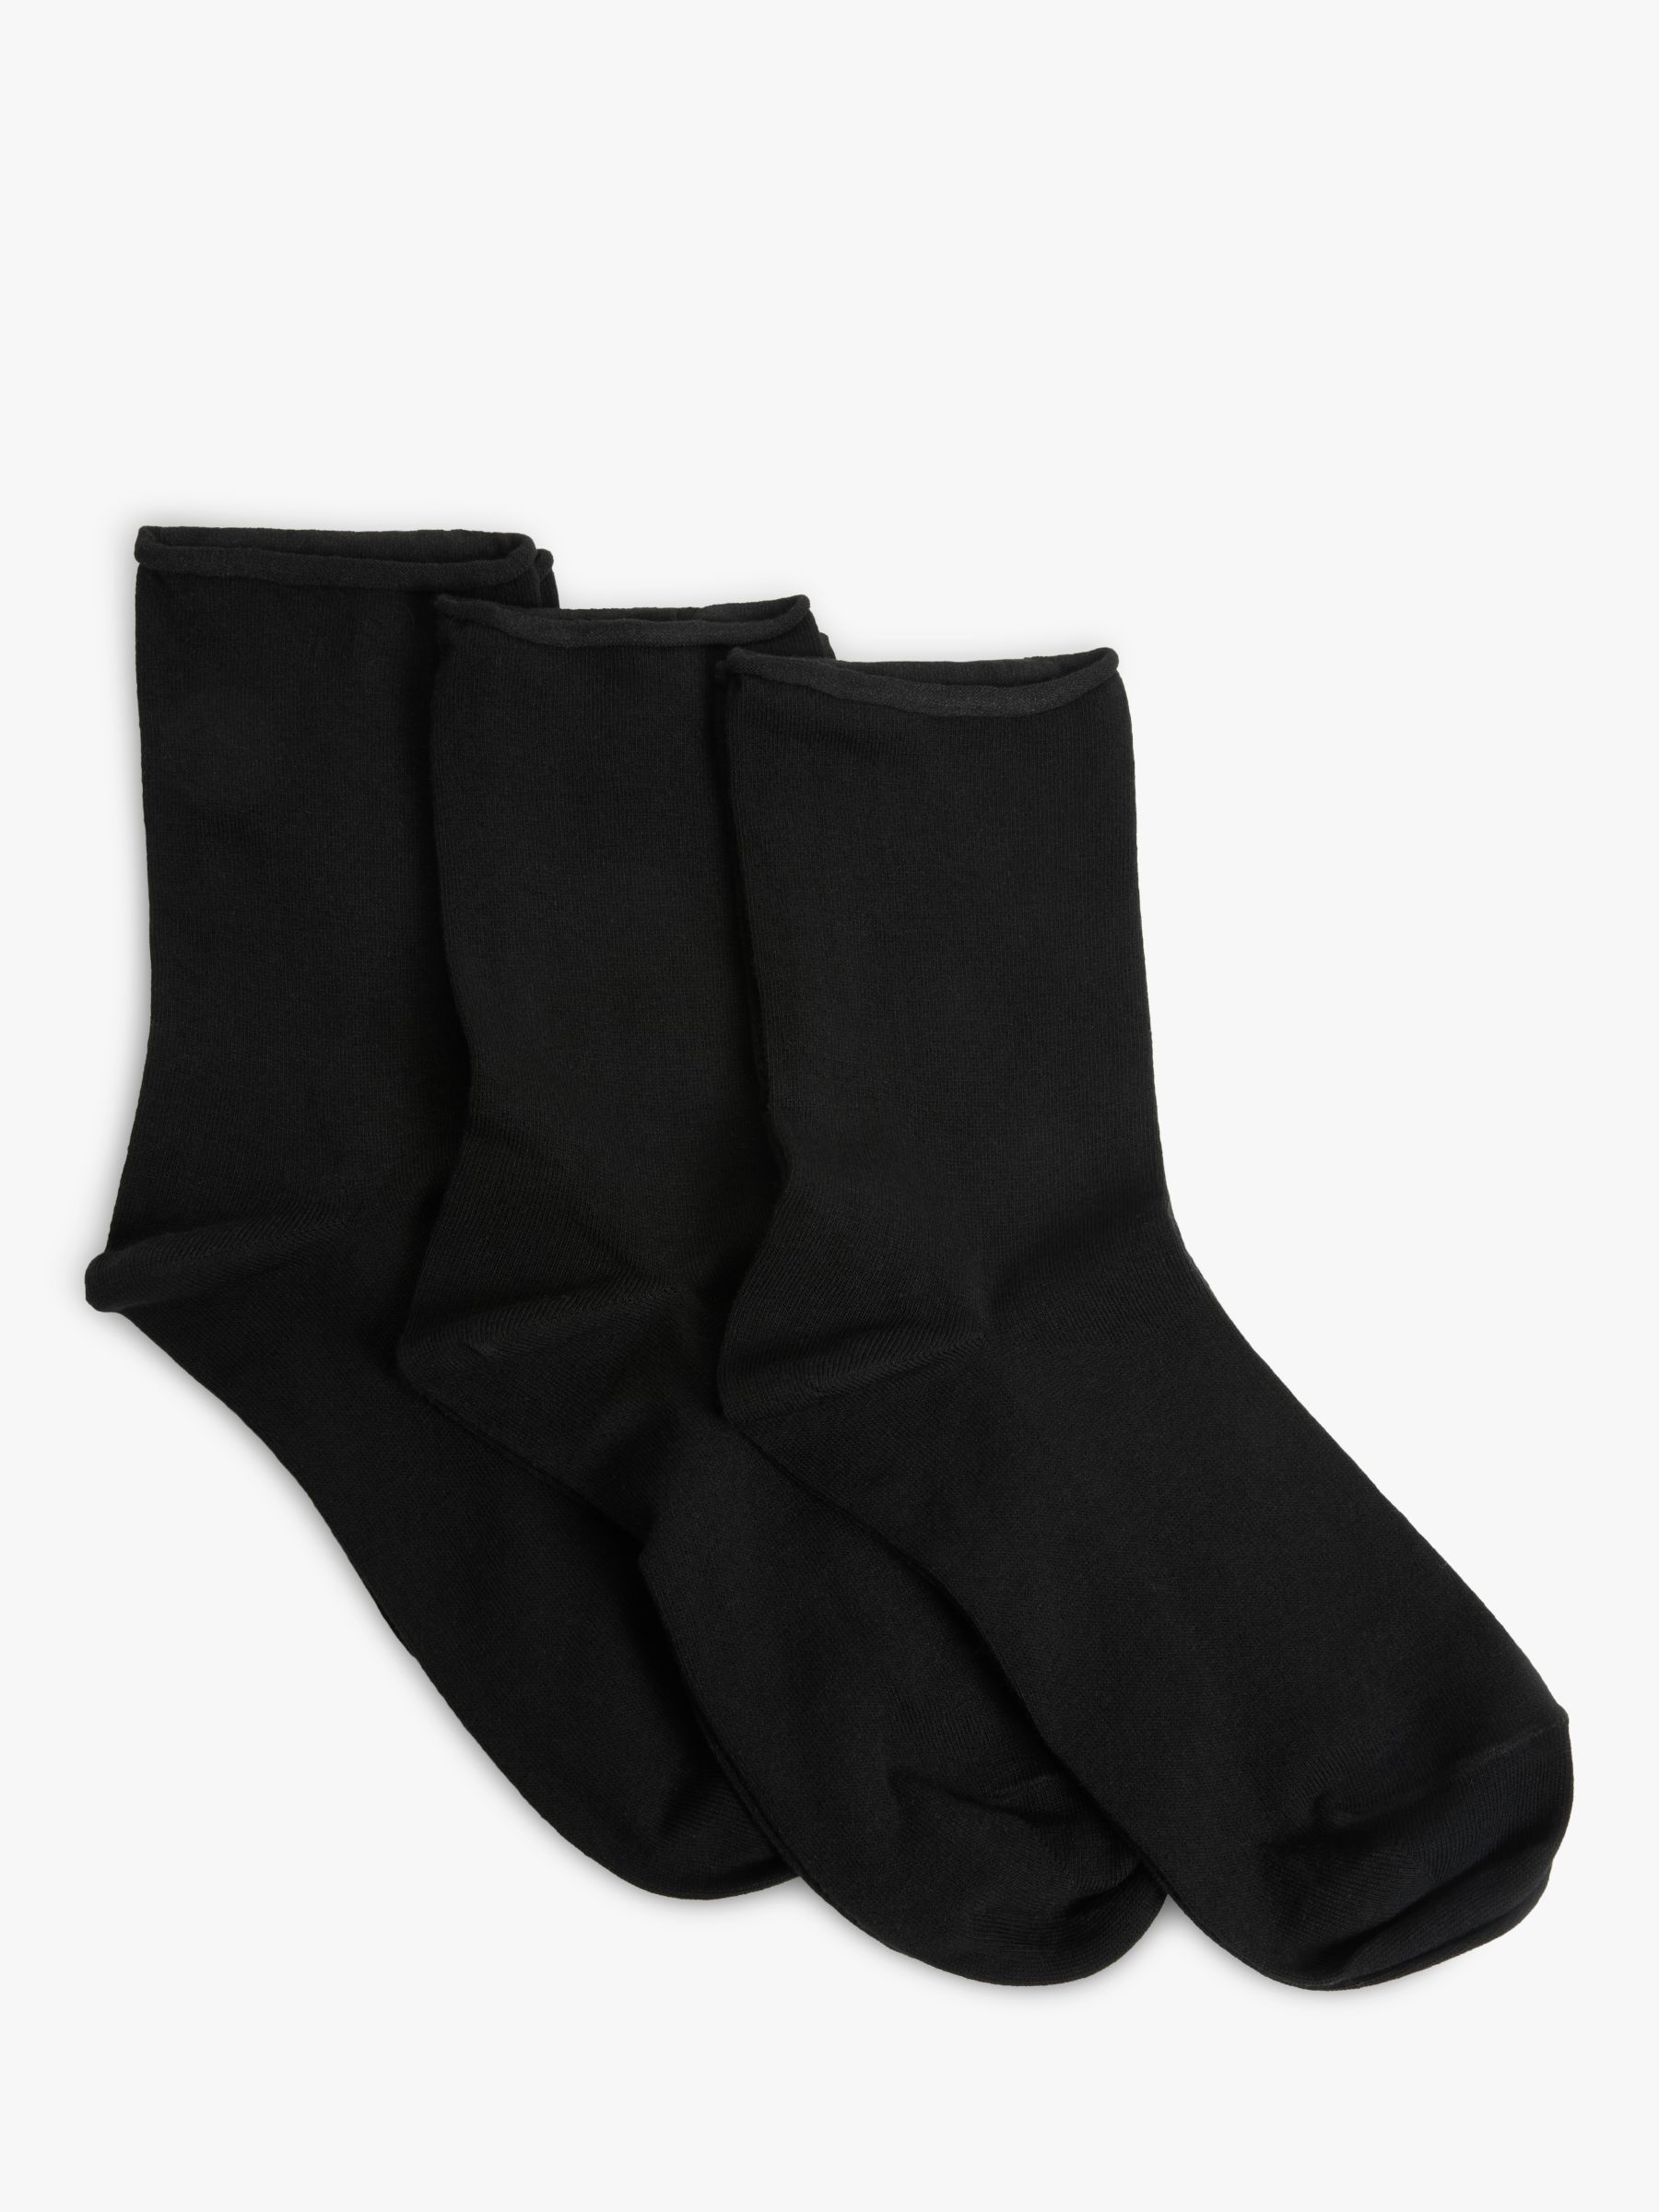 John Lewis Women's Organic Cotton Ankle Socks, Pack of 3, Black